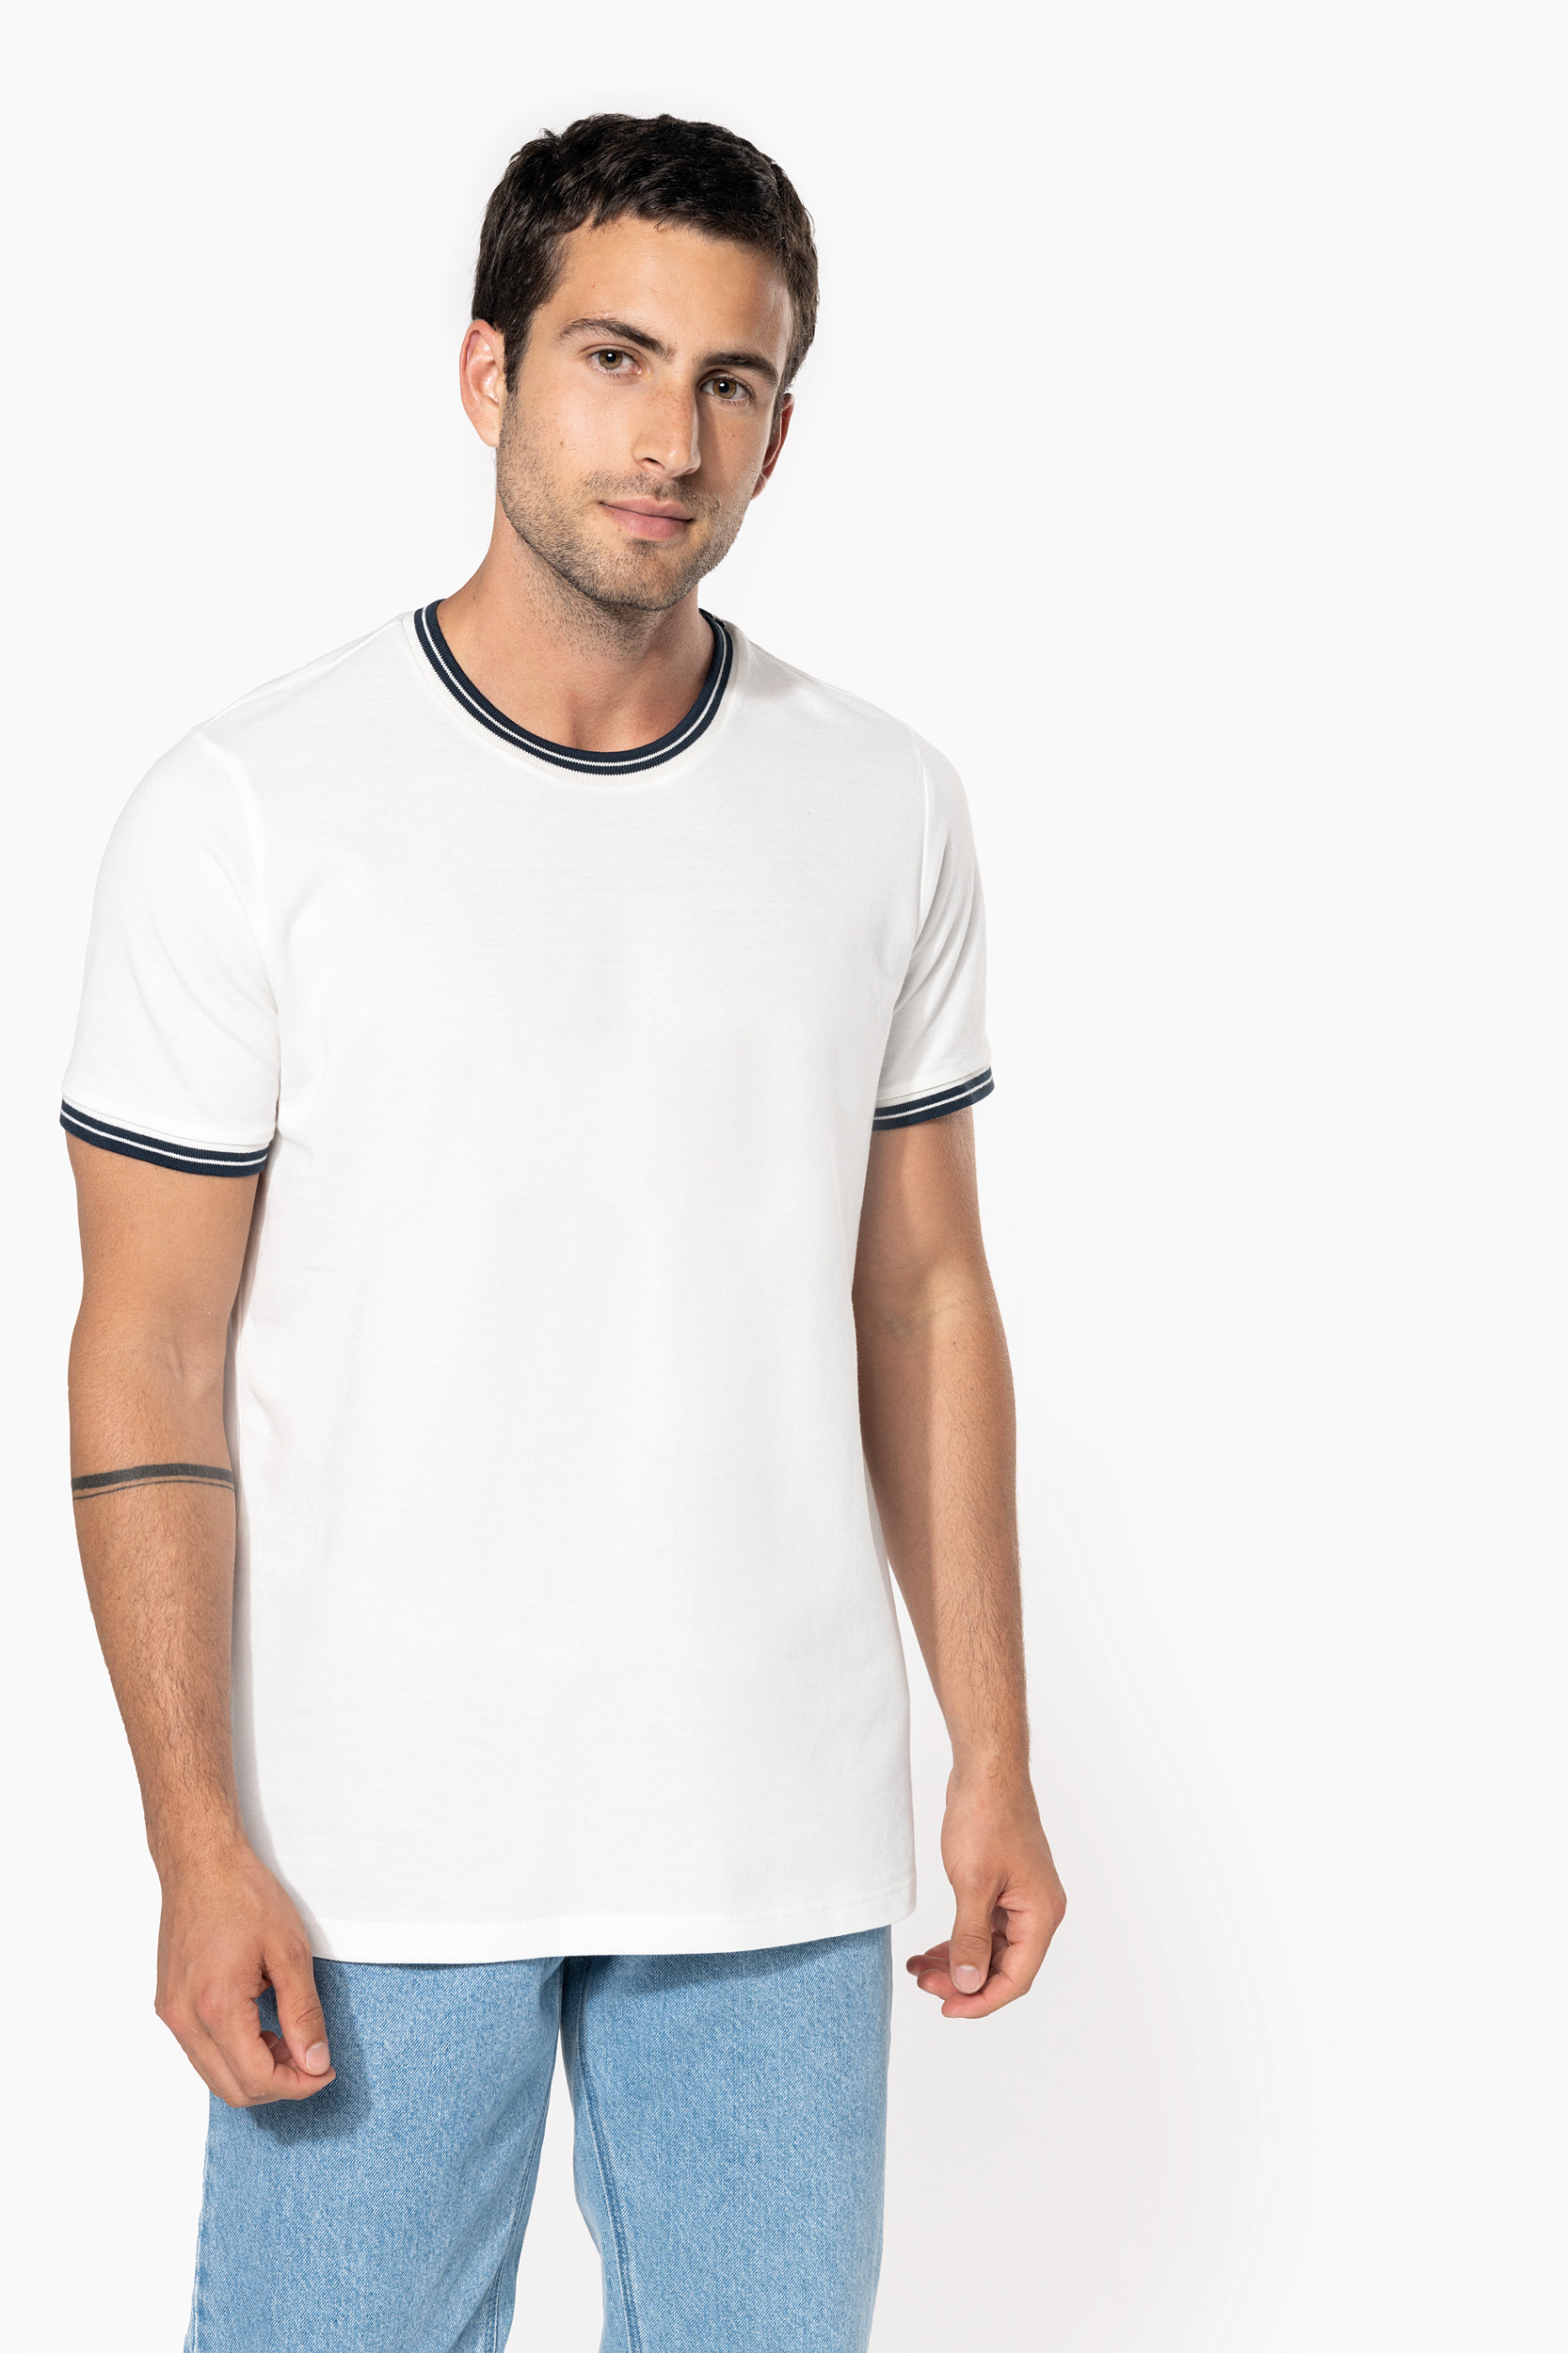 K373 - Camiseta de punto piqué con cuello redondo de hombre